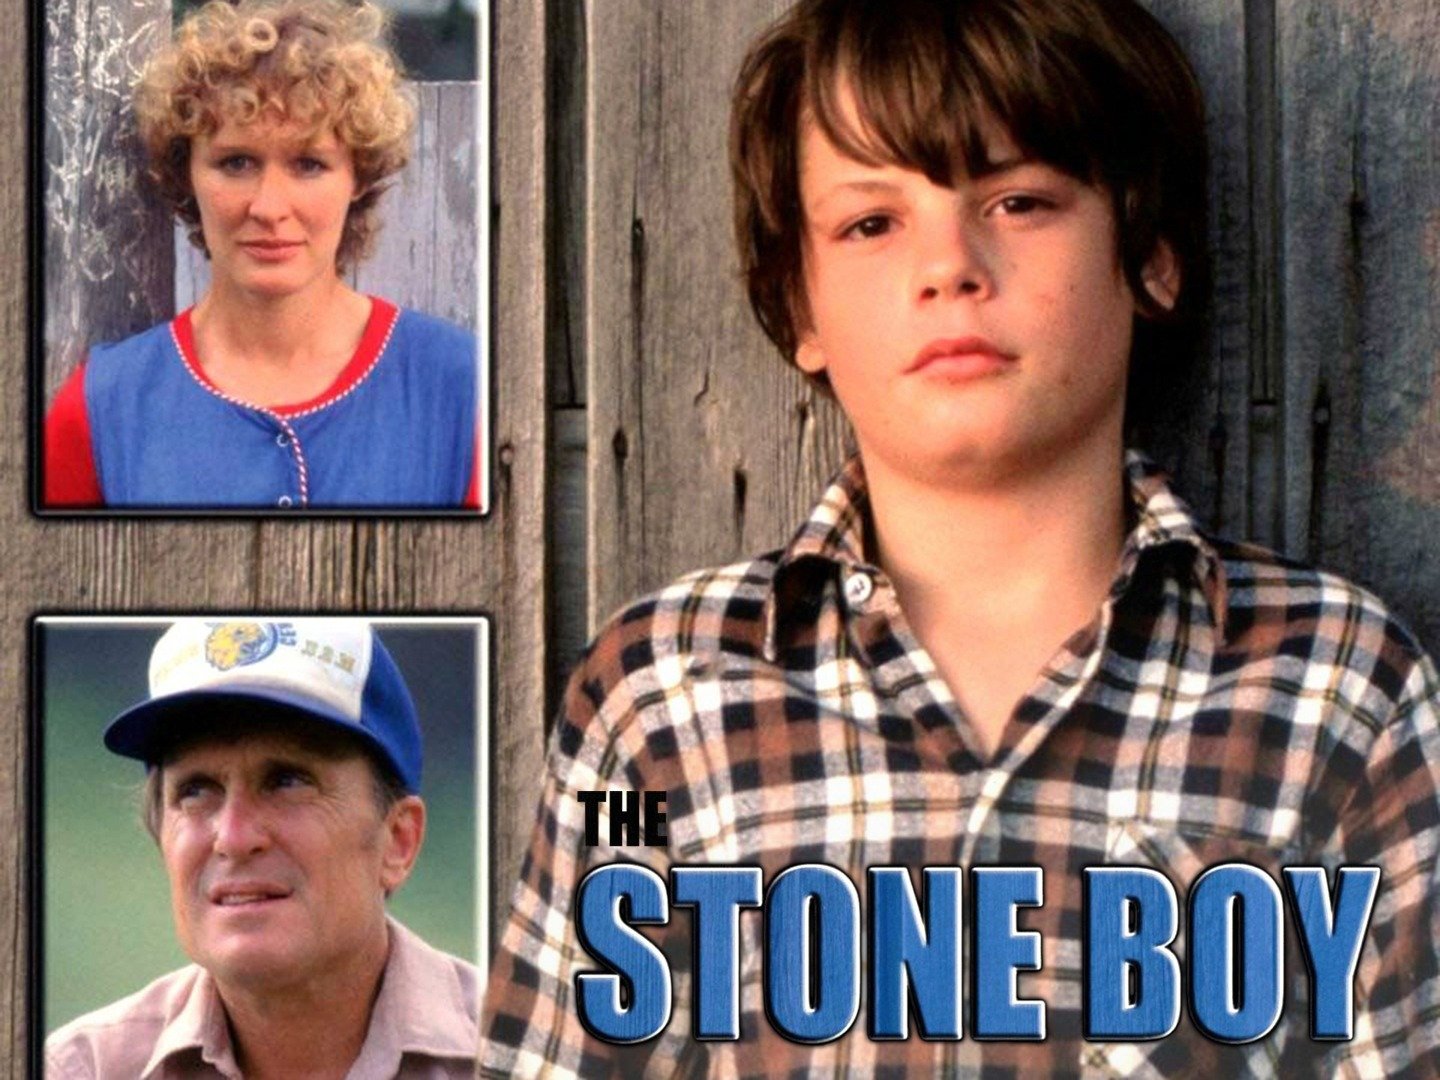 The Stone boy.